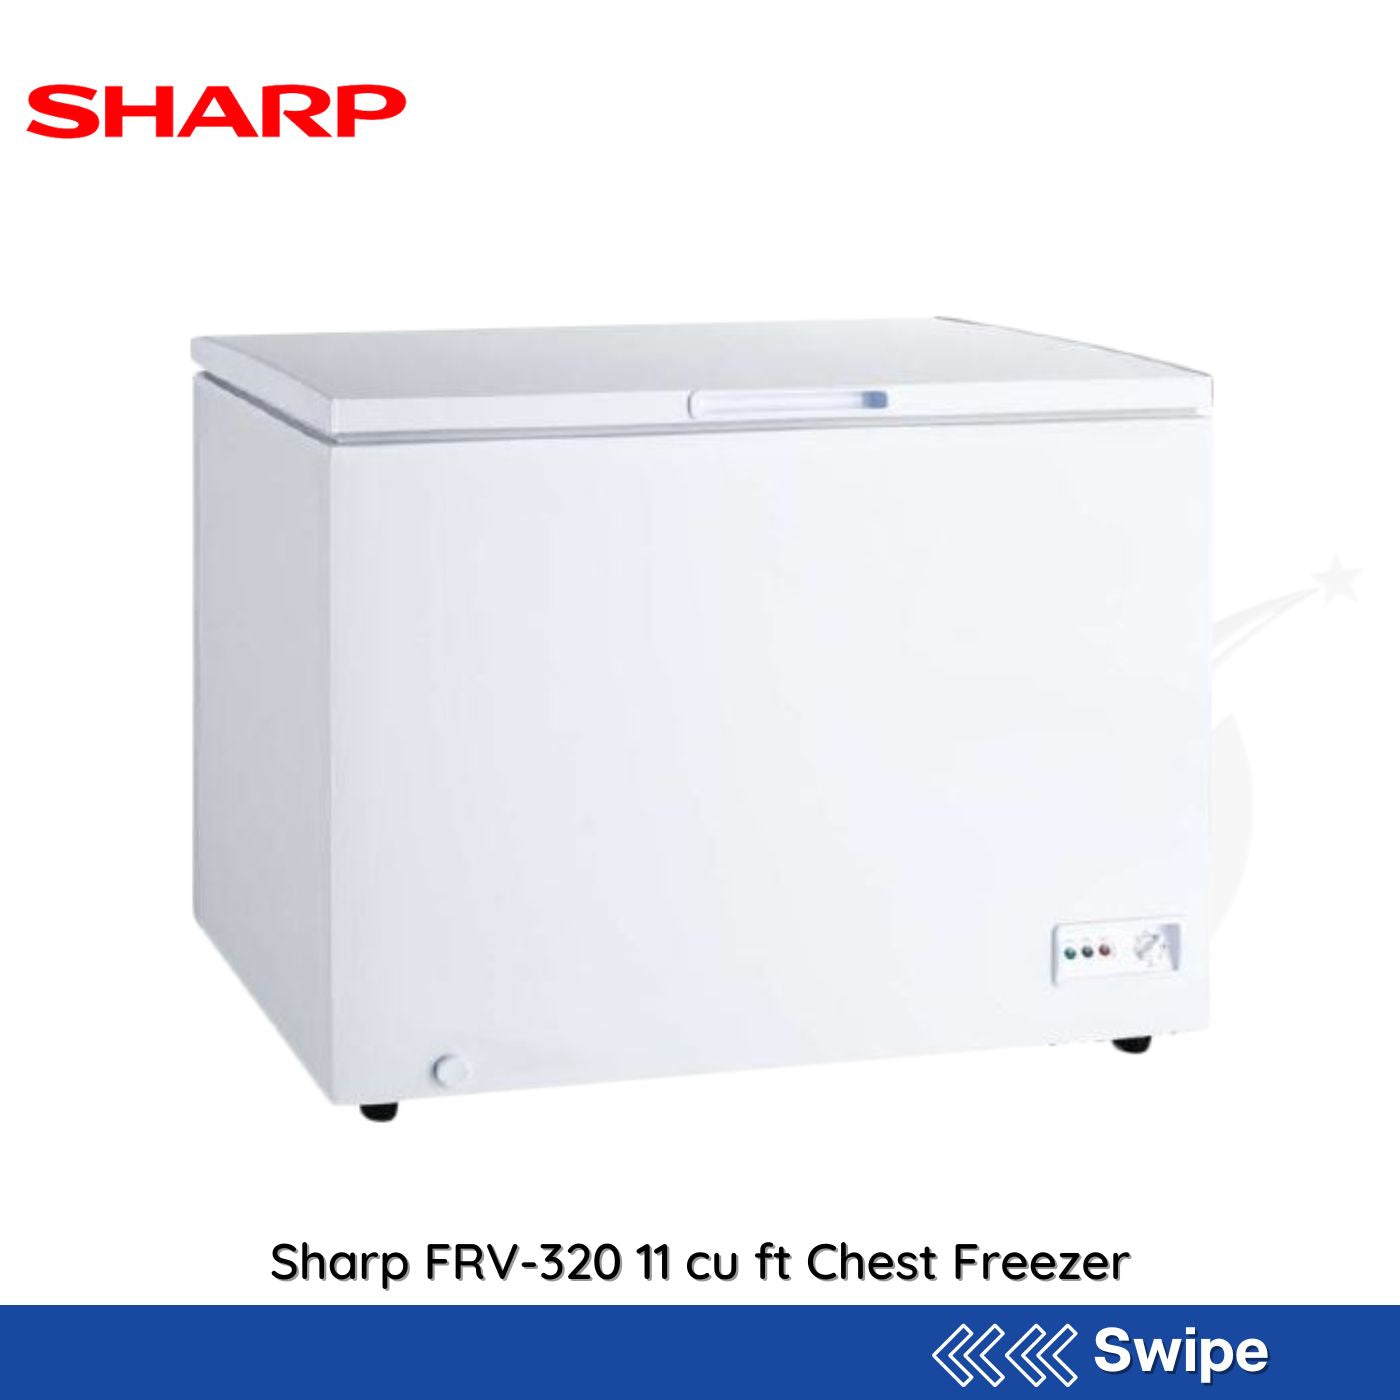 Sharp FRV-320 11 cu ft Chest Freezer